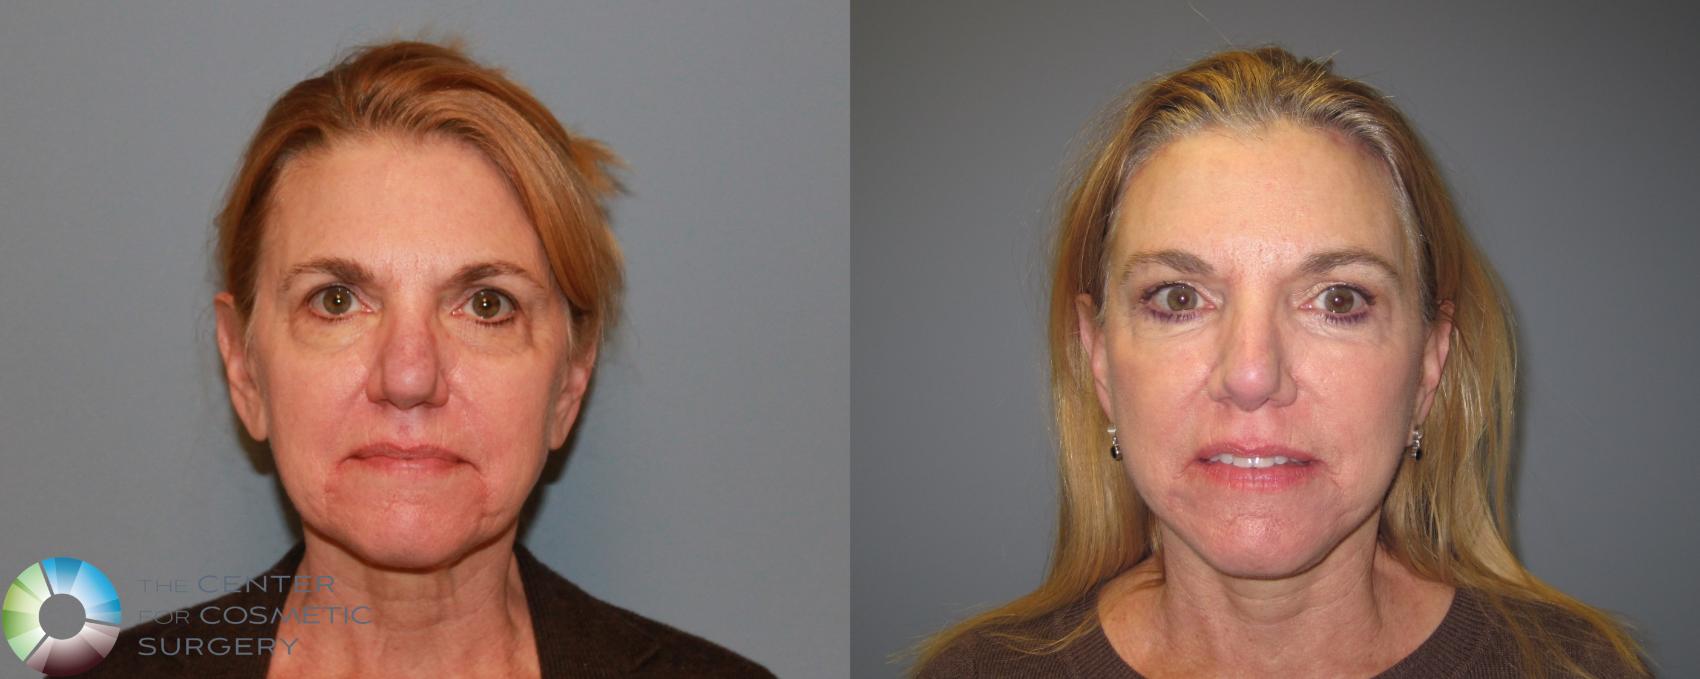 Before & After Laser Skin Resurfacing Case 459 View #1 View in Denver & Golden, CO